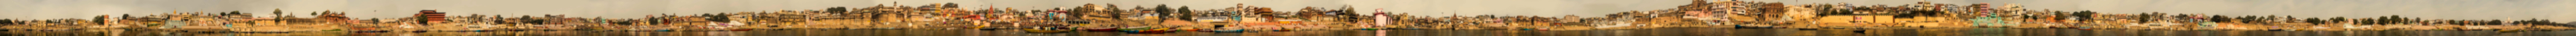 Panorama of Varanasi Ghats